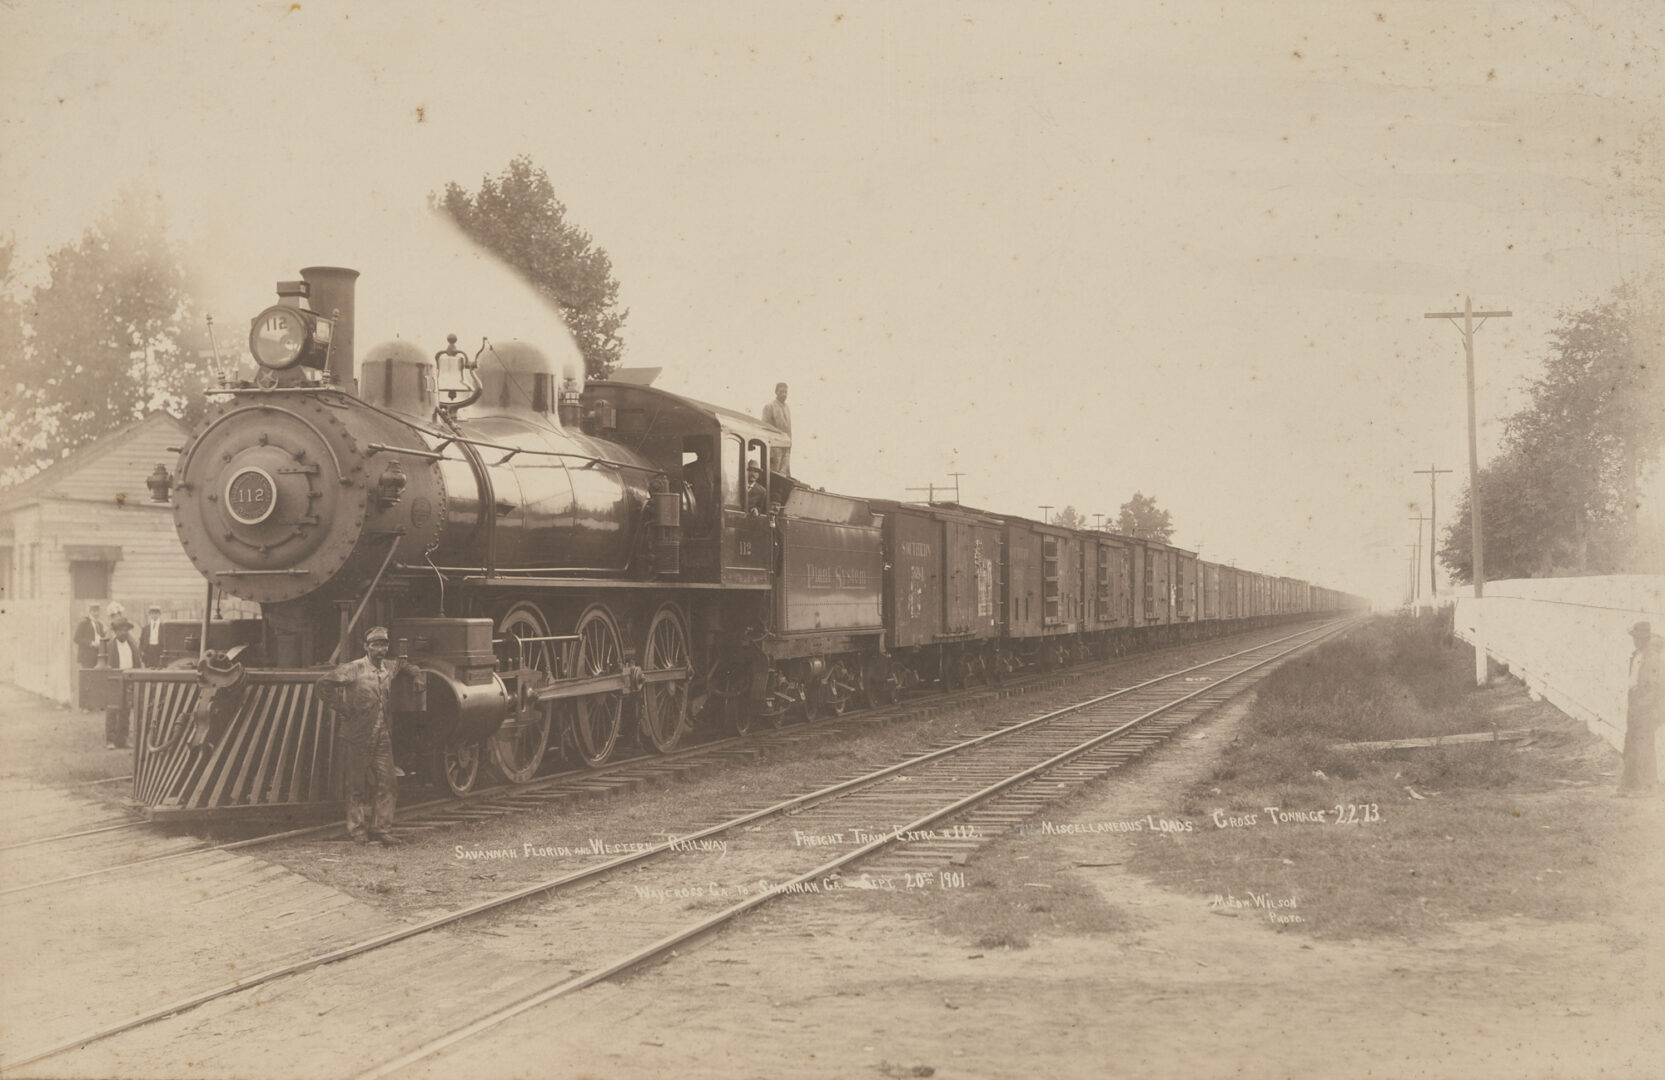 Lot 880: Early photograph of Savannah, Florida & Western Railway Train